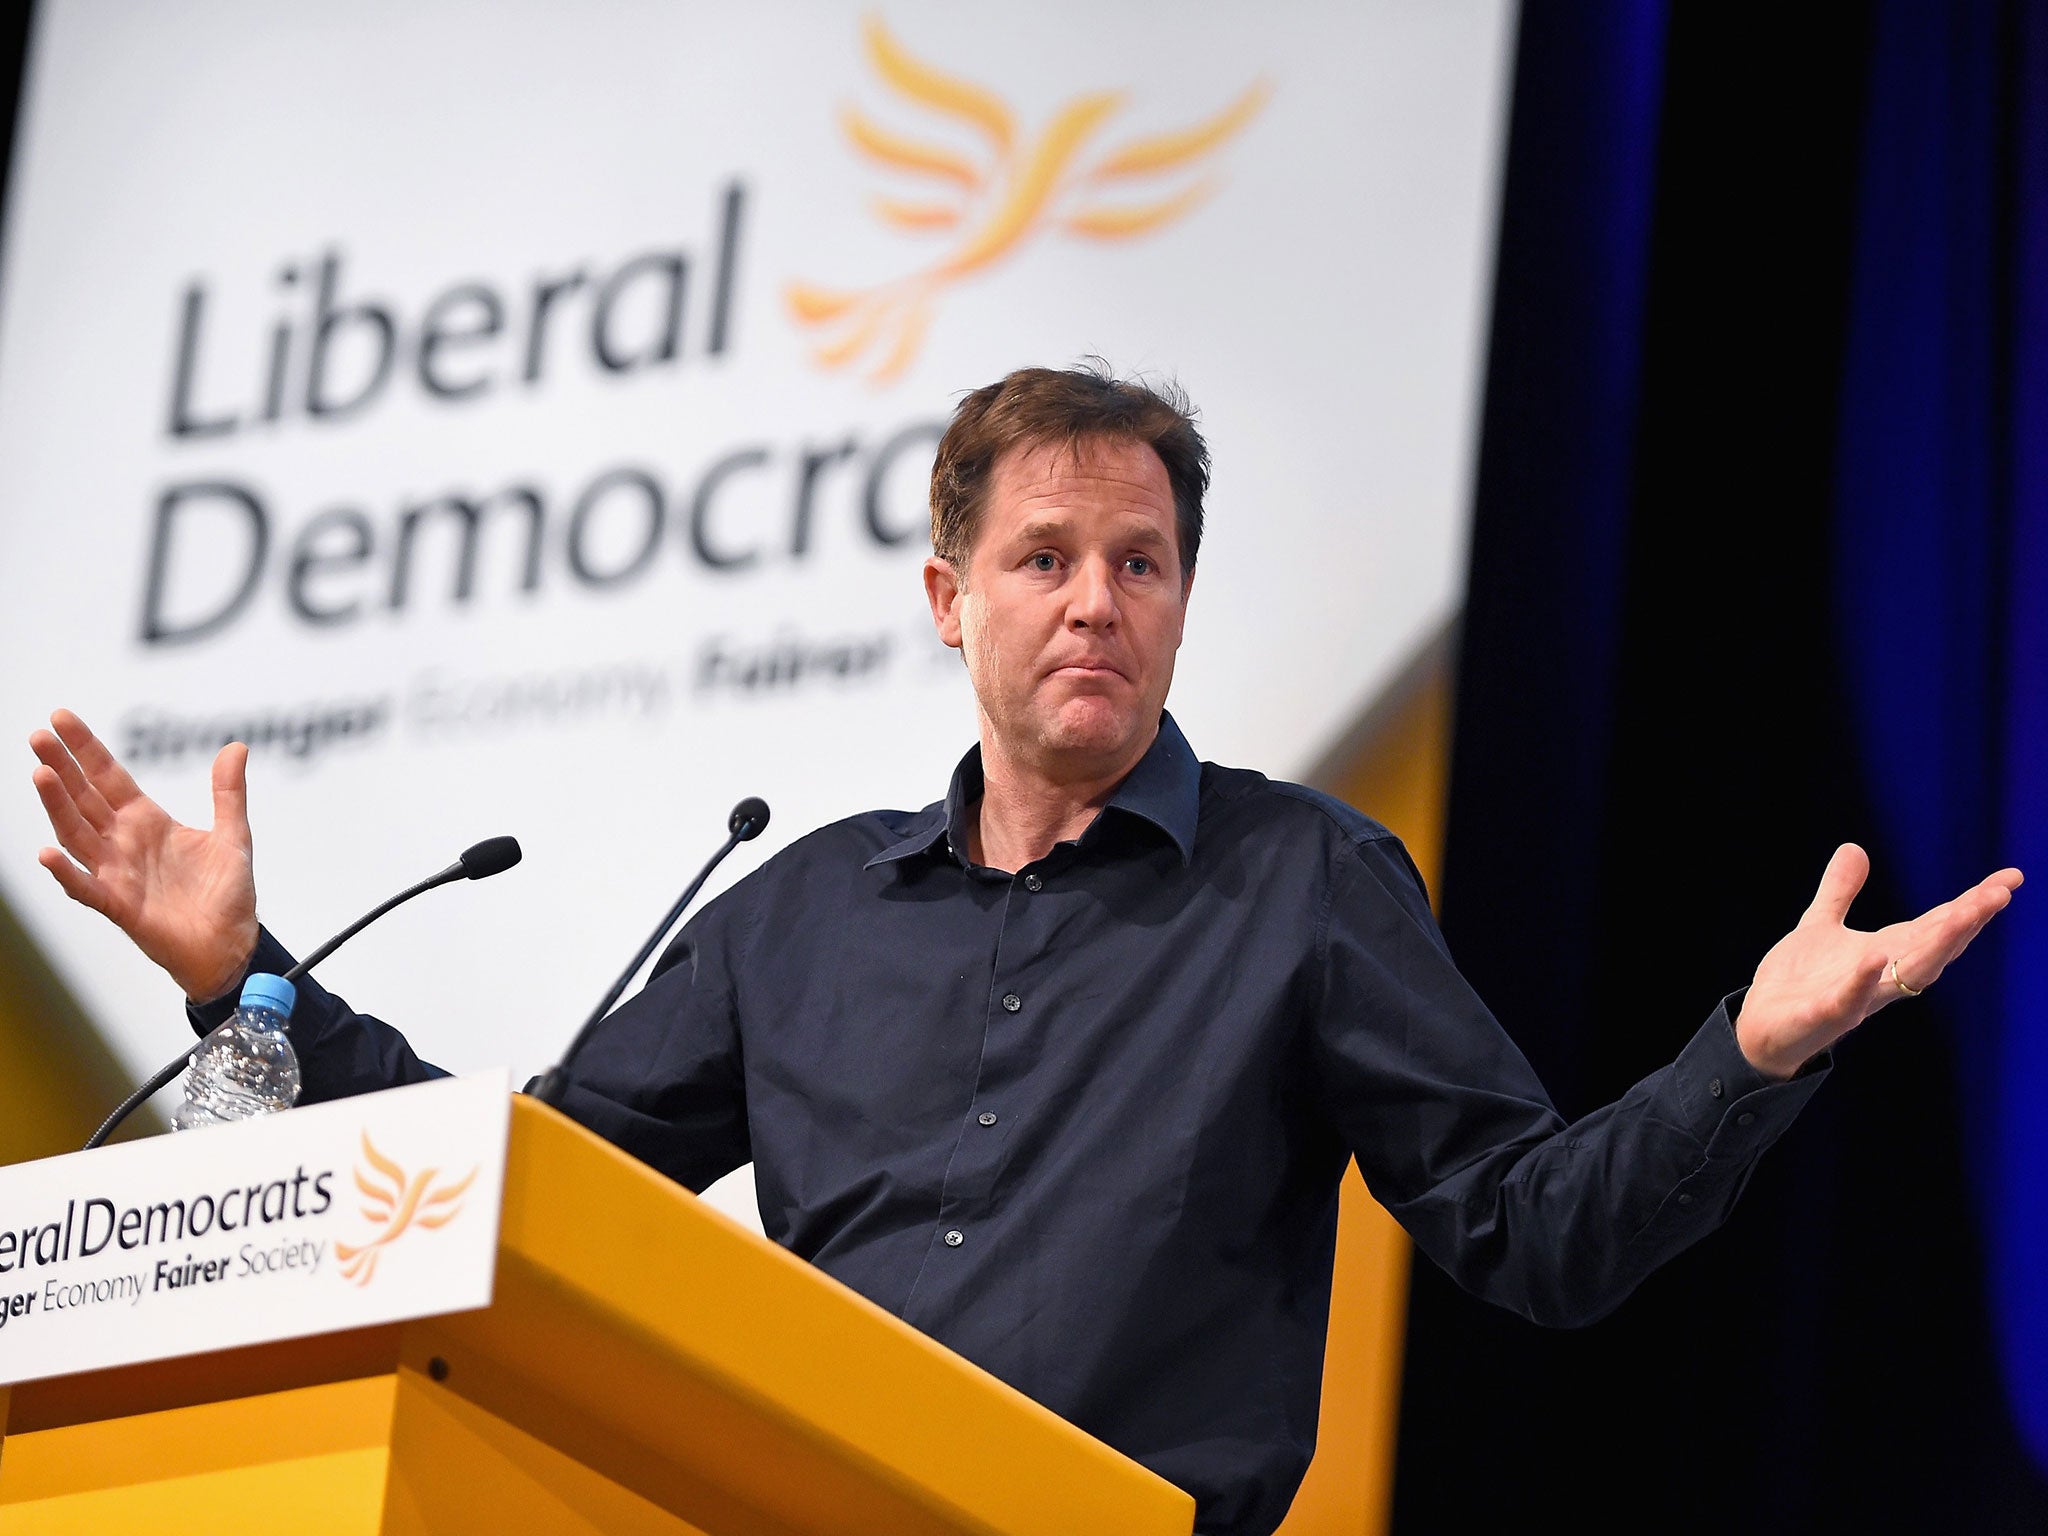 Deputy Prime Minister Nick Clegg speaks at the Liberal Democrat Autumn conference on 6 October